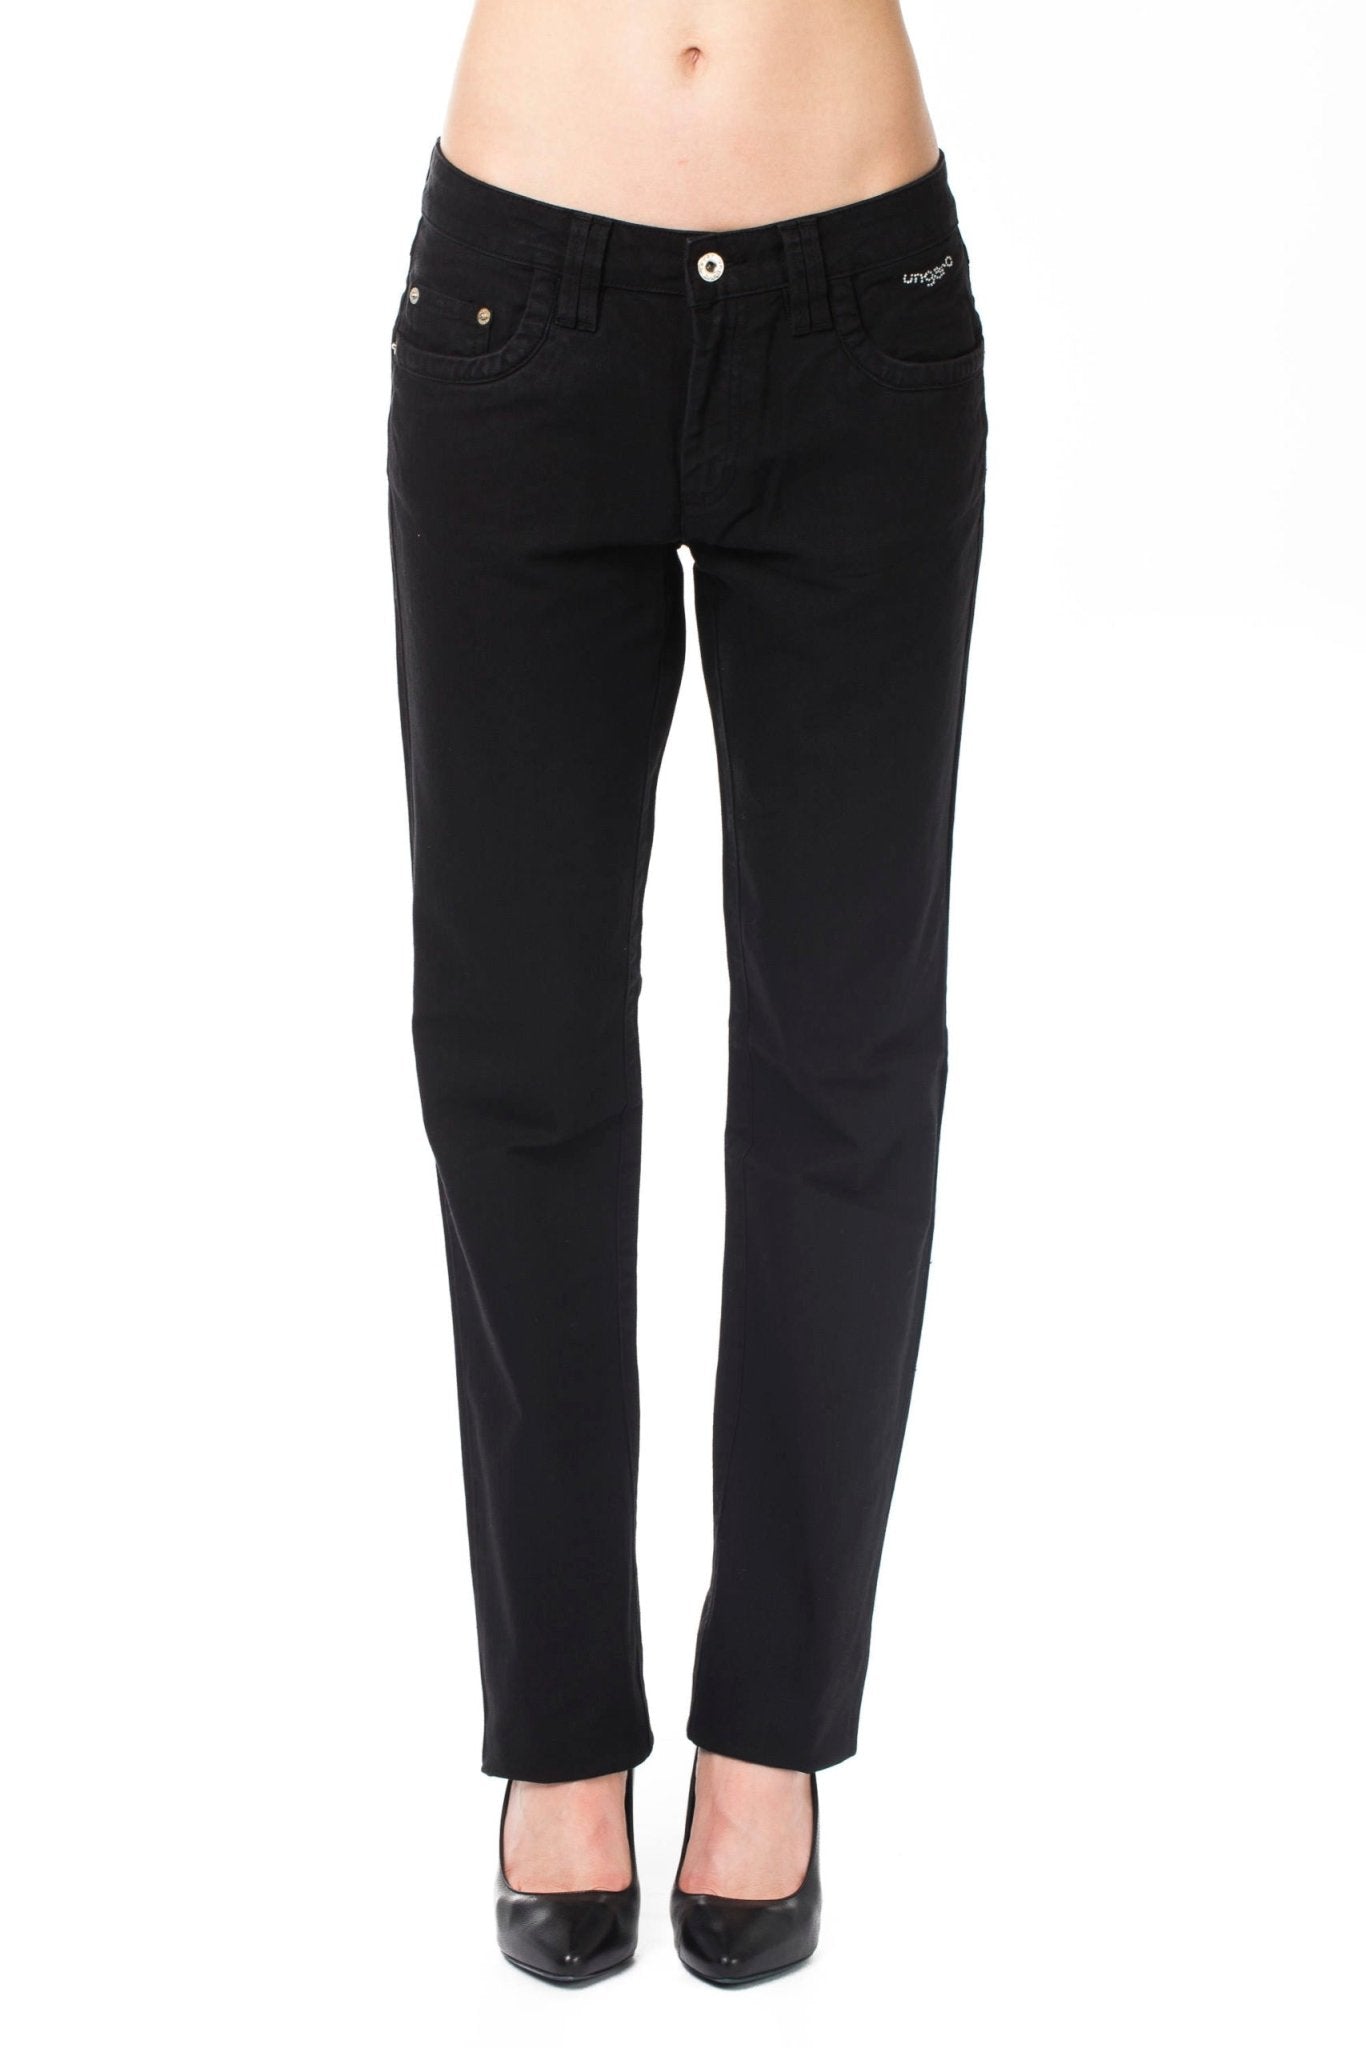 Ungaro Fever Black Cotton Jeans & Pant - Fizigo